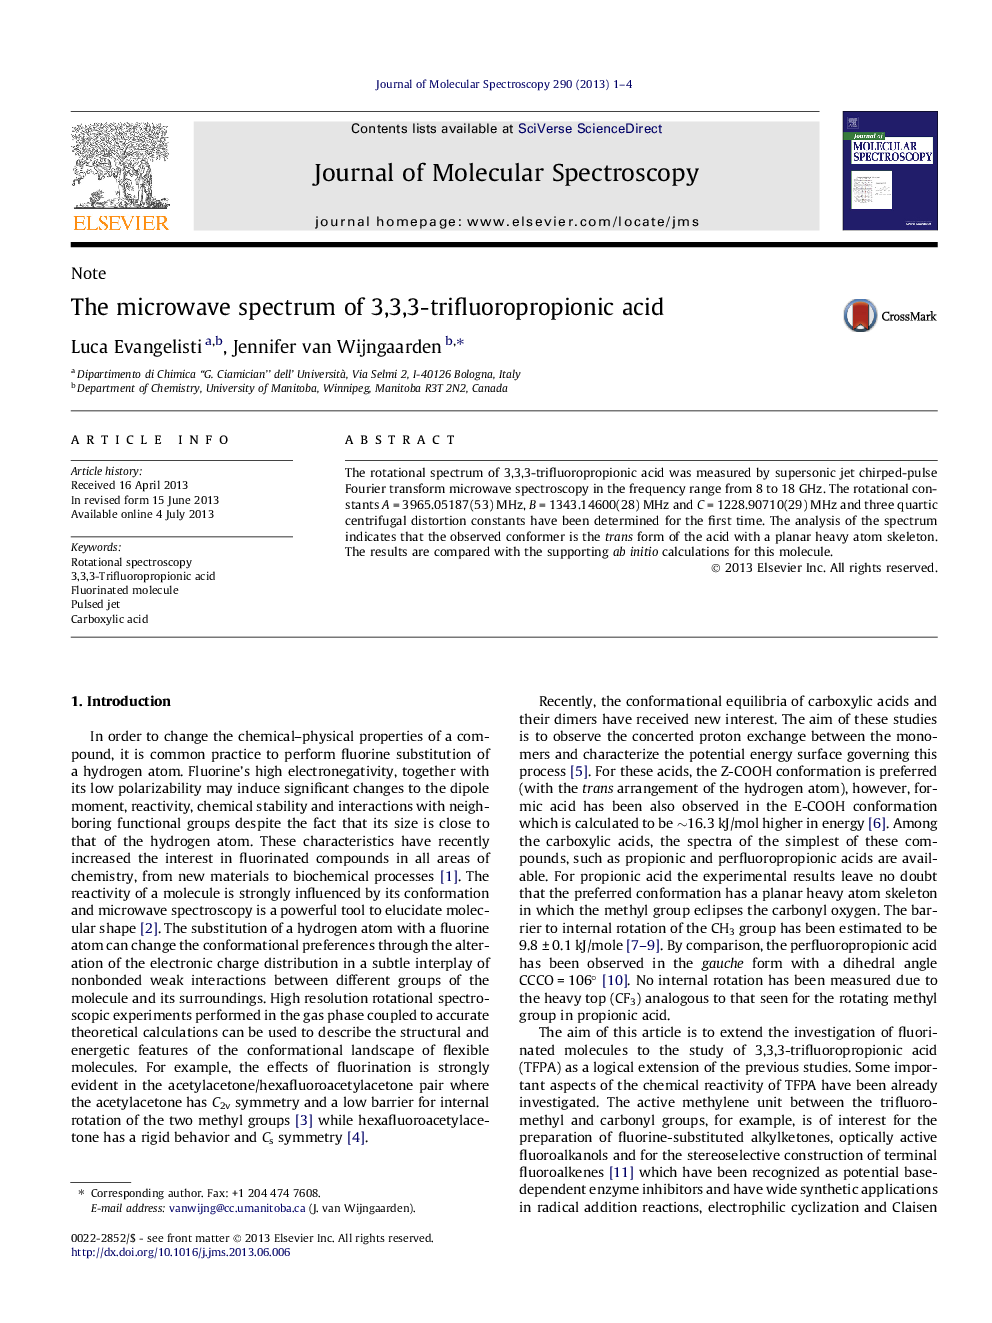 The microwave spectrum of 3,3,3-trifluoropropionic acid